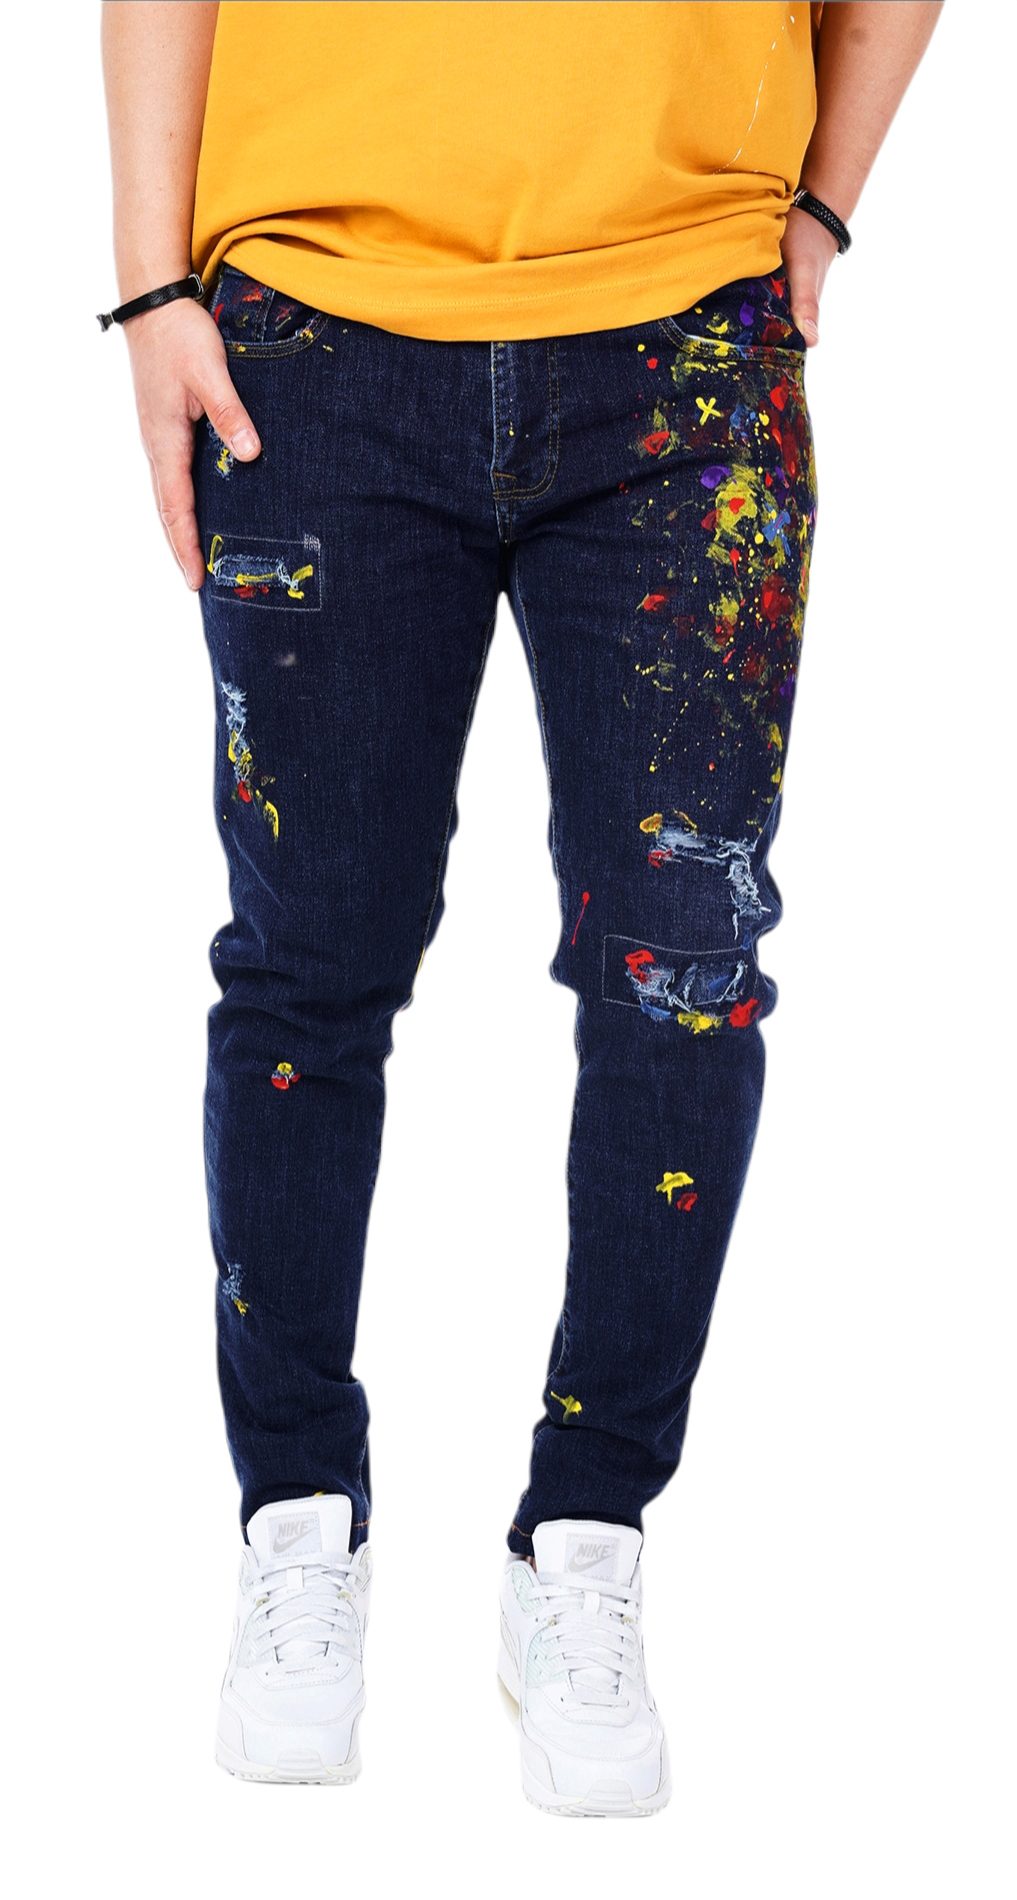 Jeans Custom Fit - Crushed mushrooms edition MJL5405